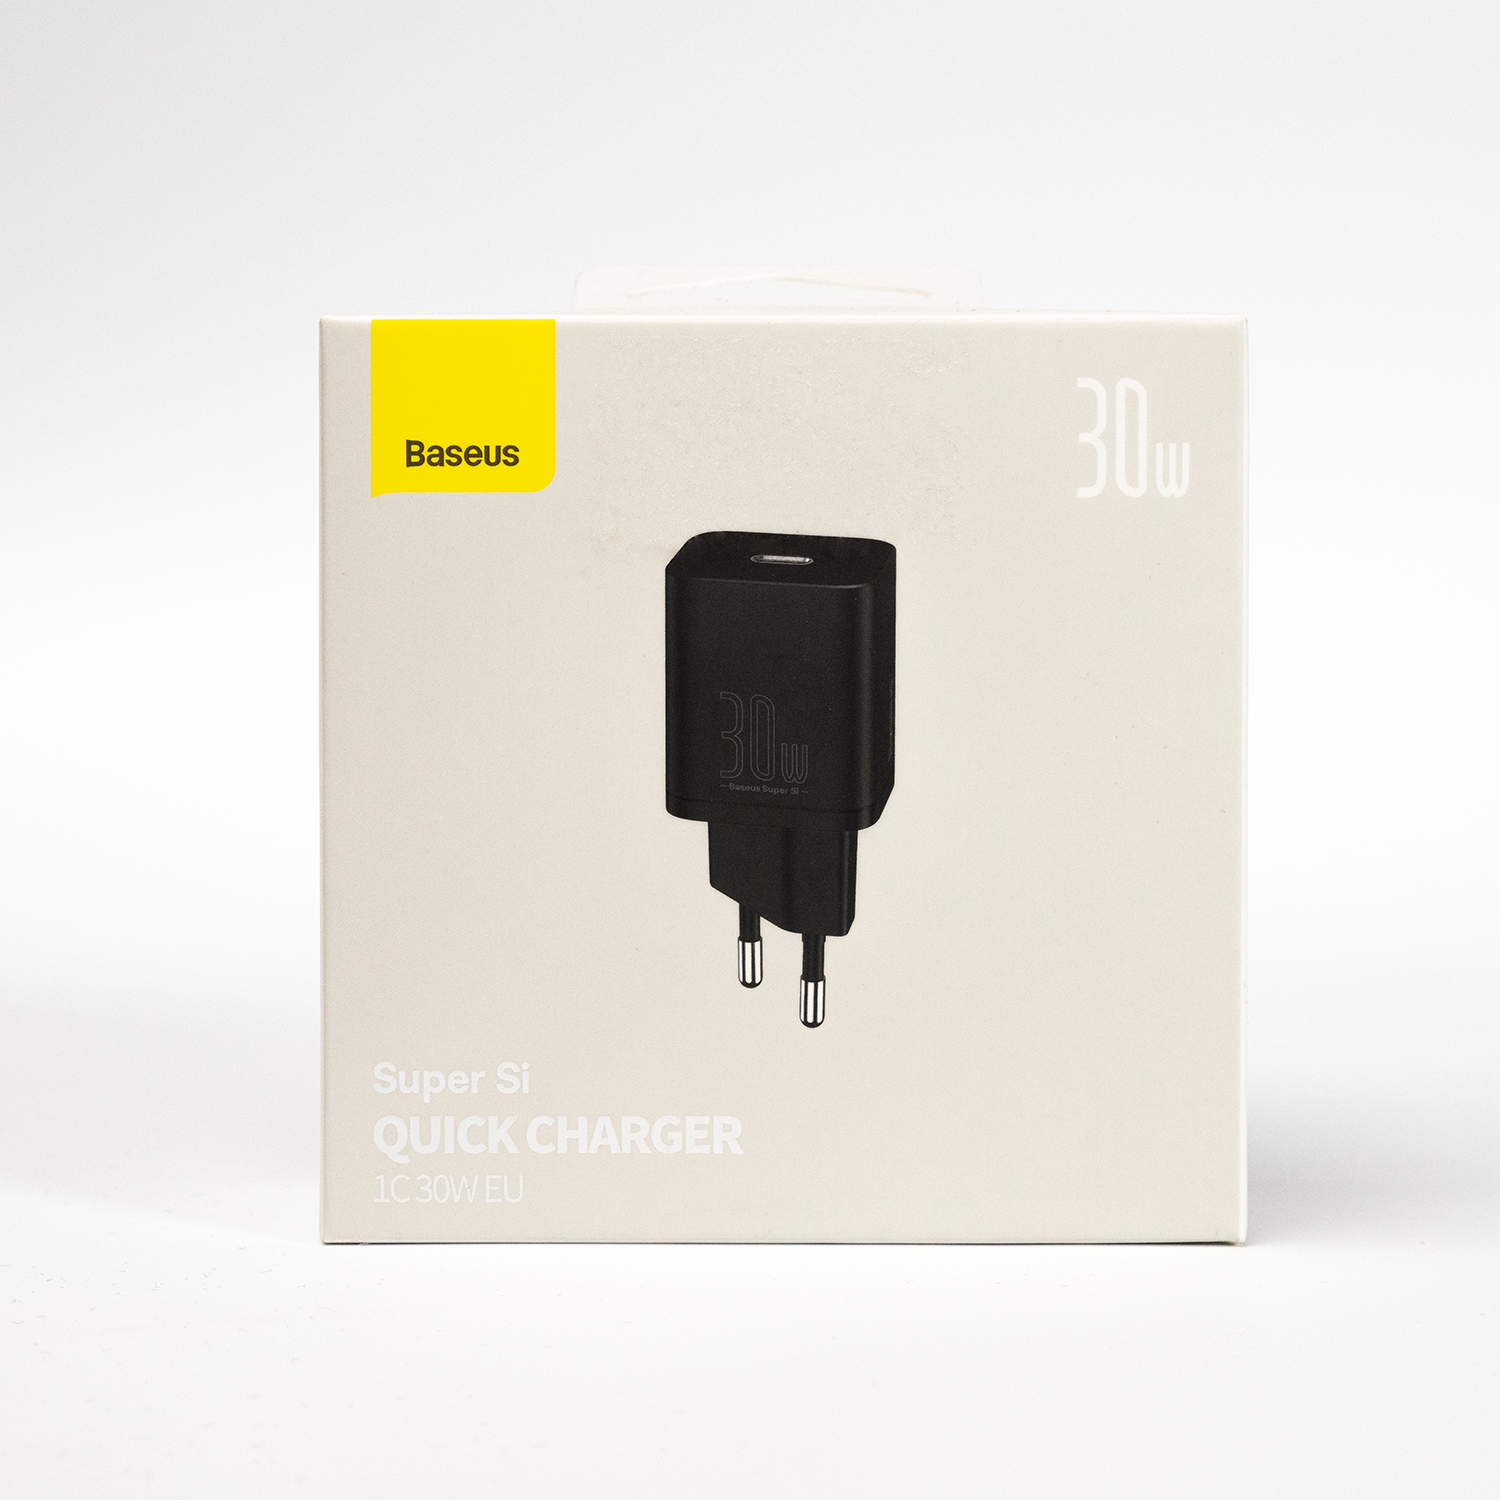 Сетевое зарядное устройство Baseus Super Si Quick Charger 1C 30W EU (CCSUP-J01), Черное